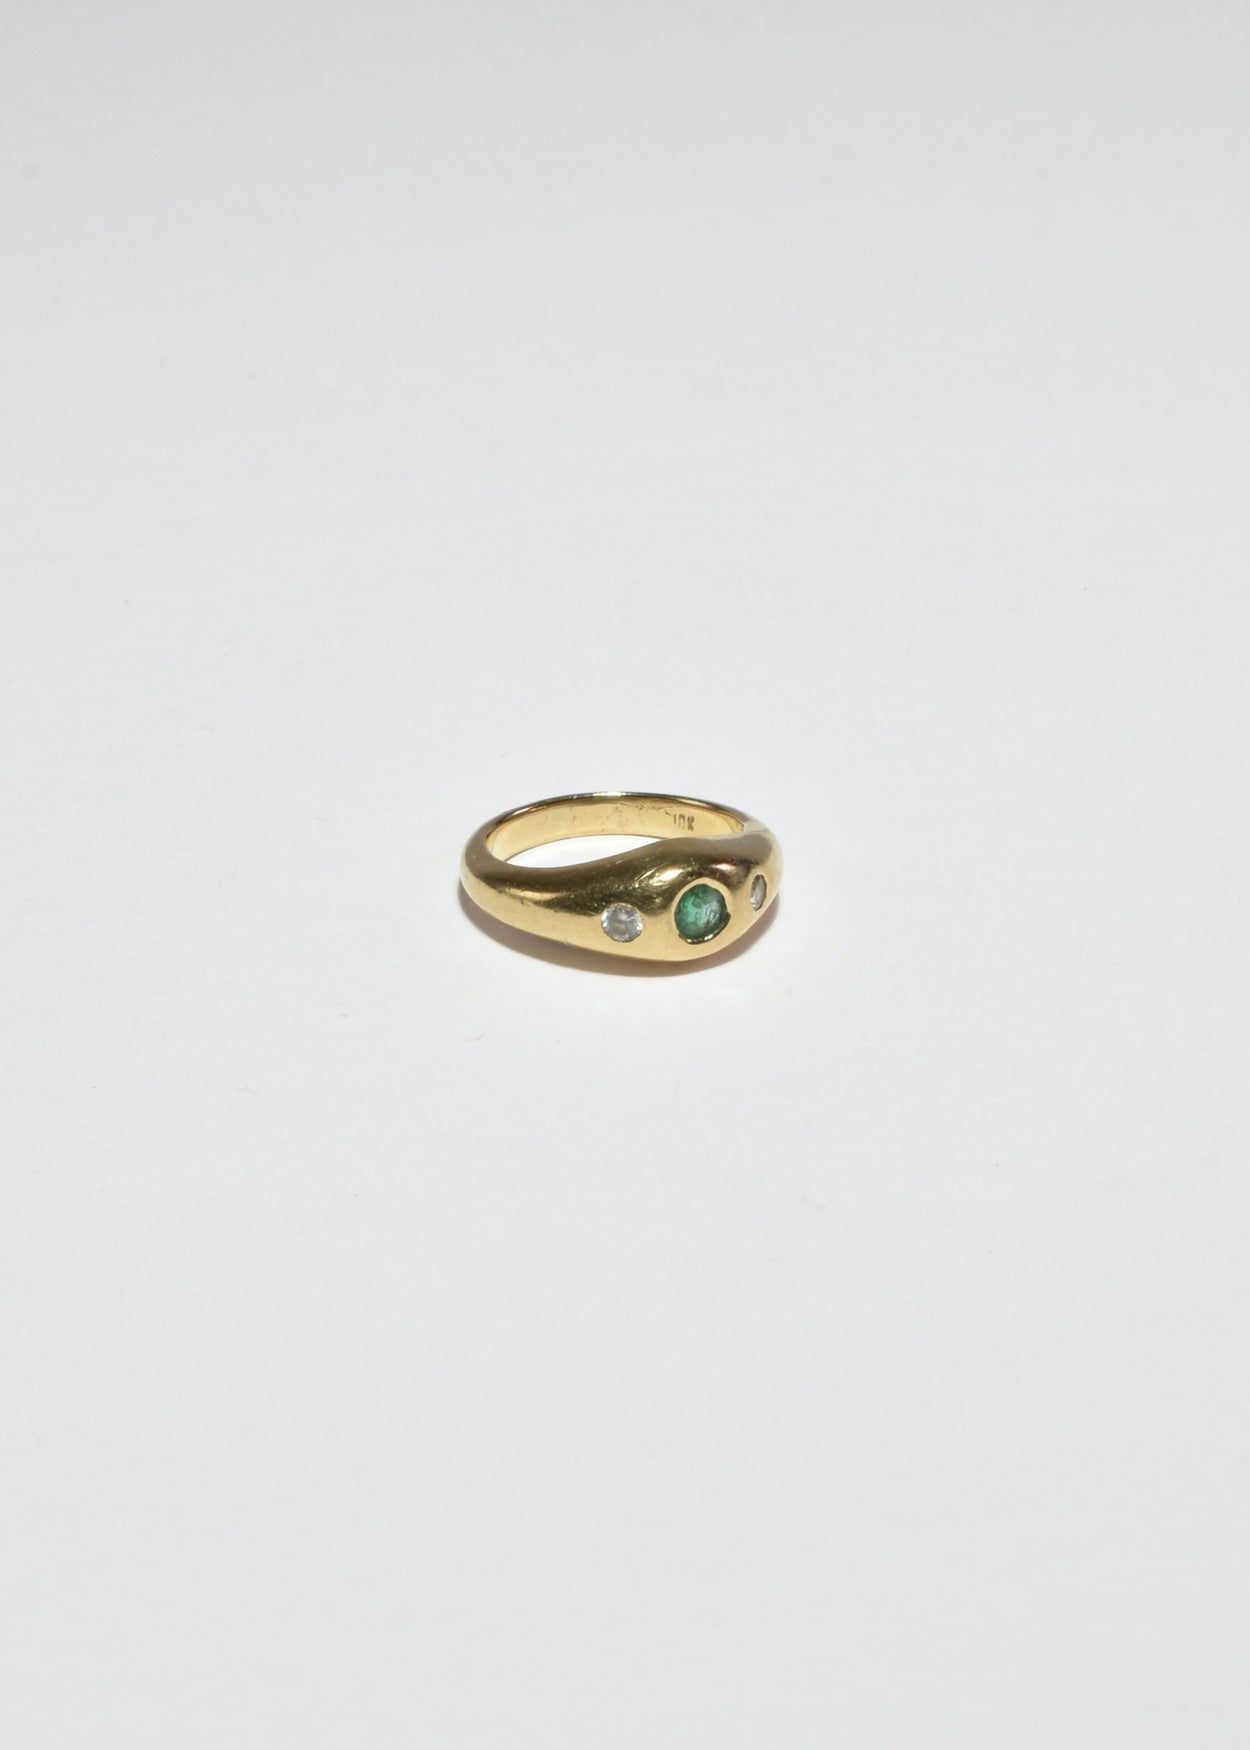 Emerald Diamond Pinky Ring